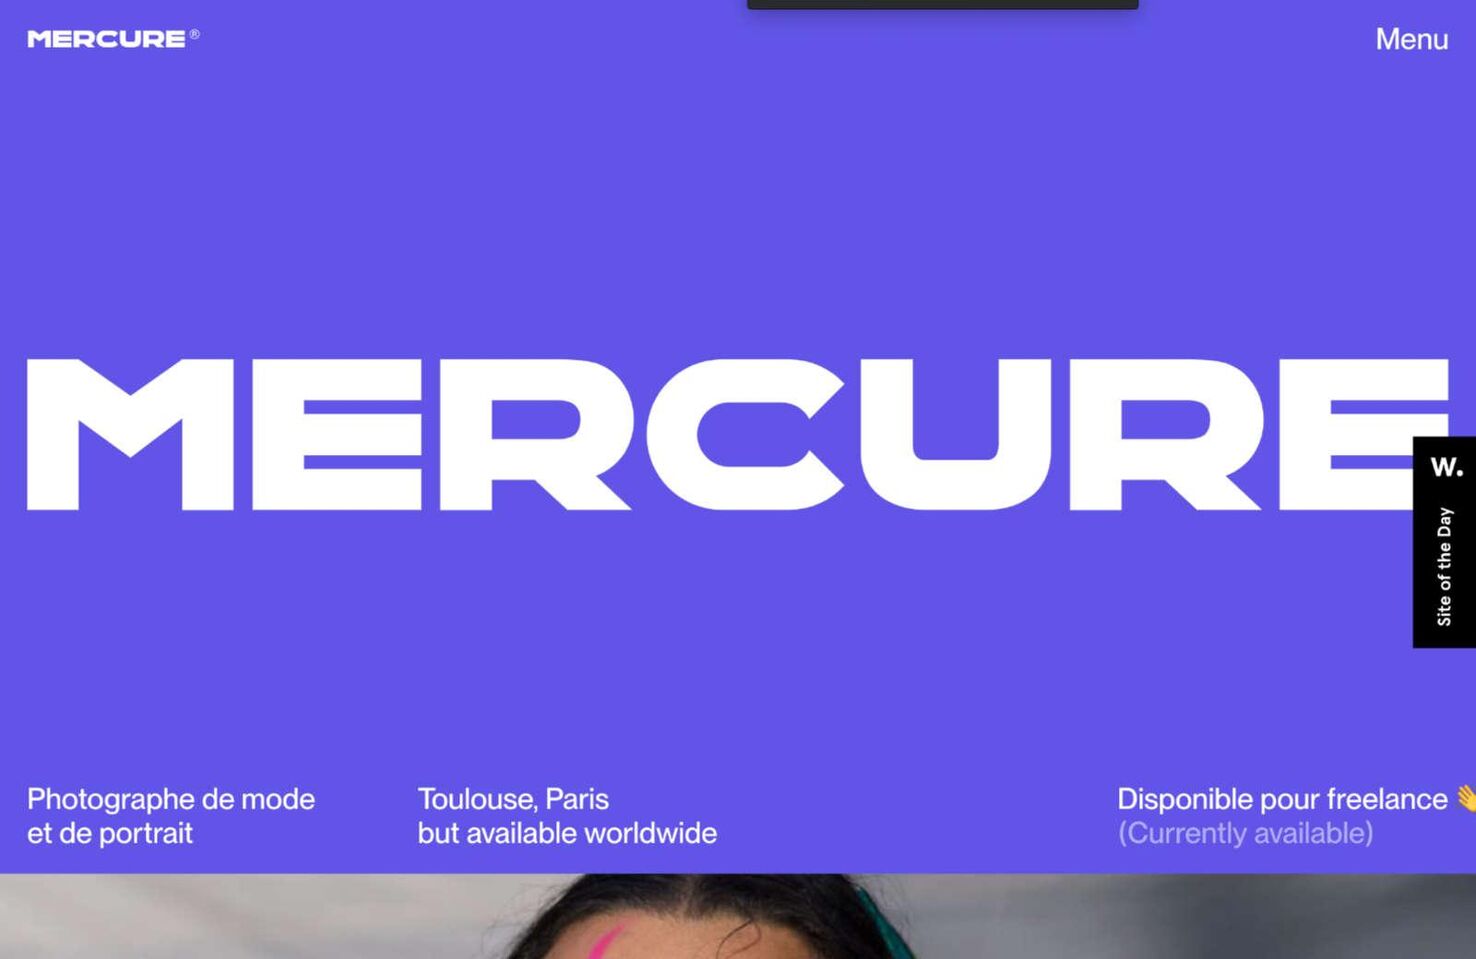 Mercure Studio